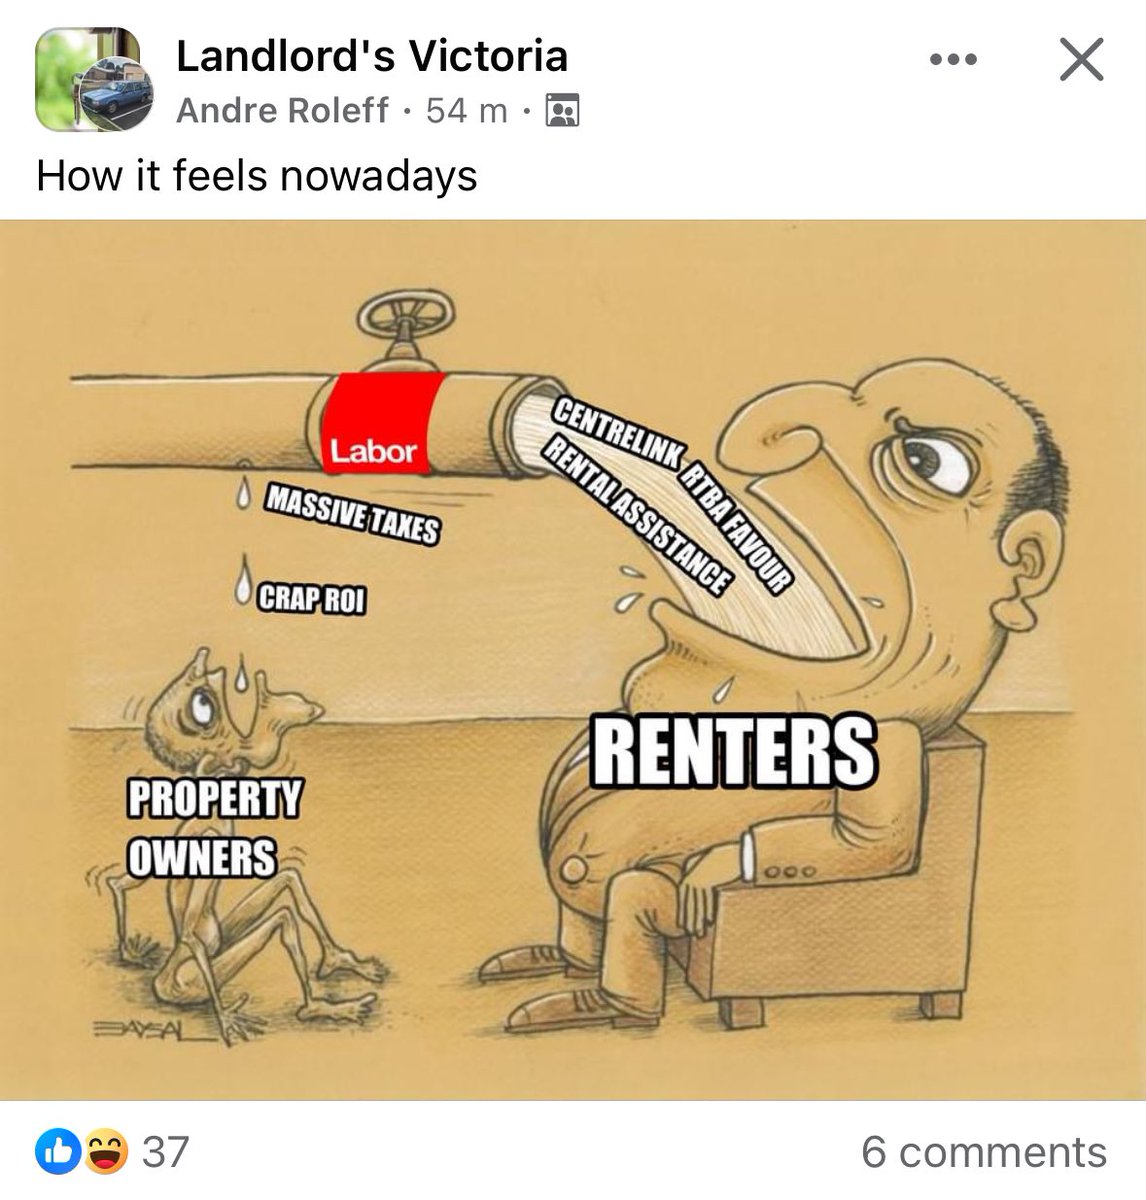 Landlord’s (sic) still having a normal one.